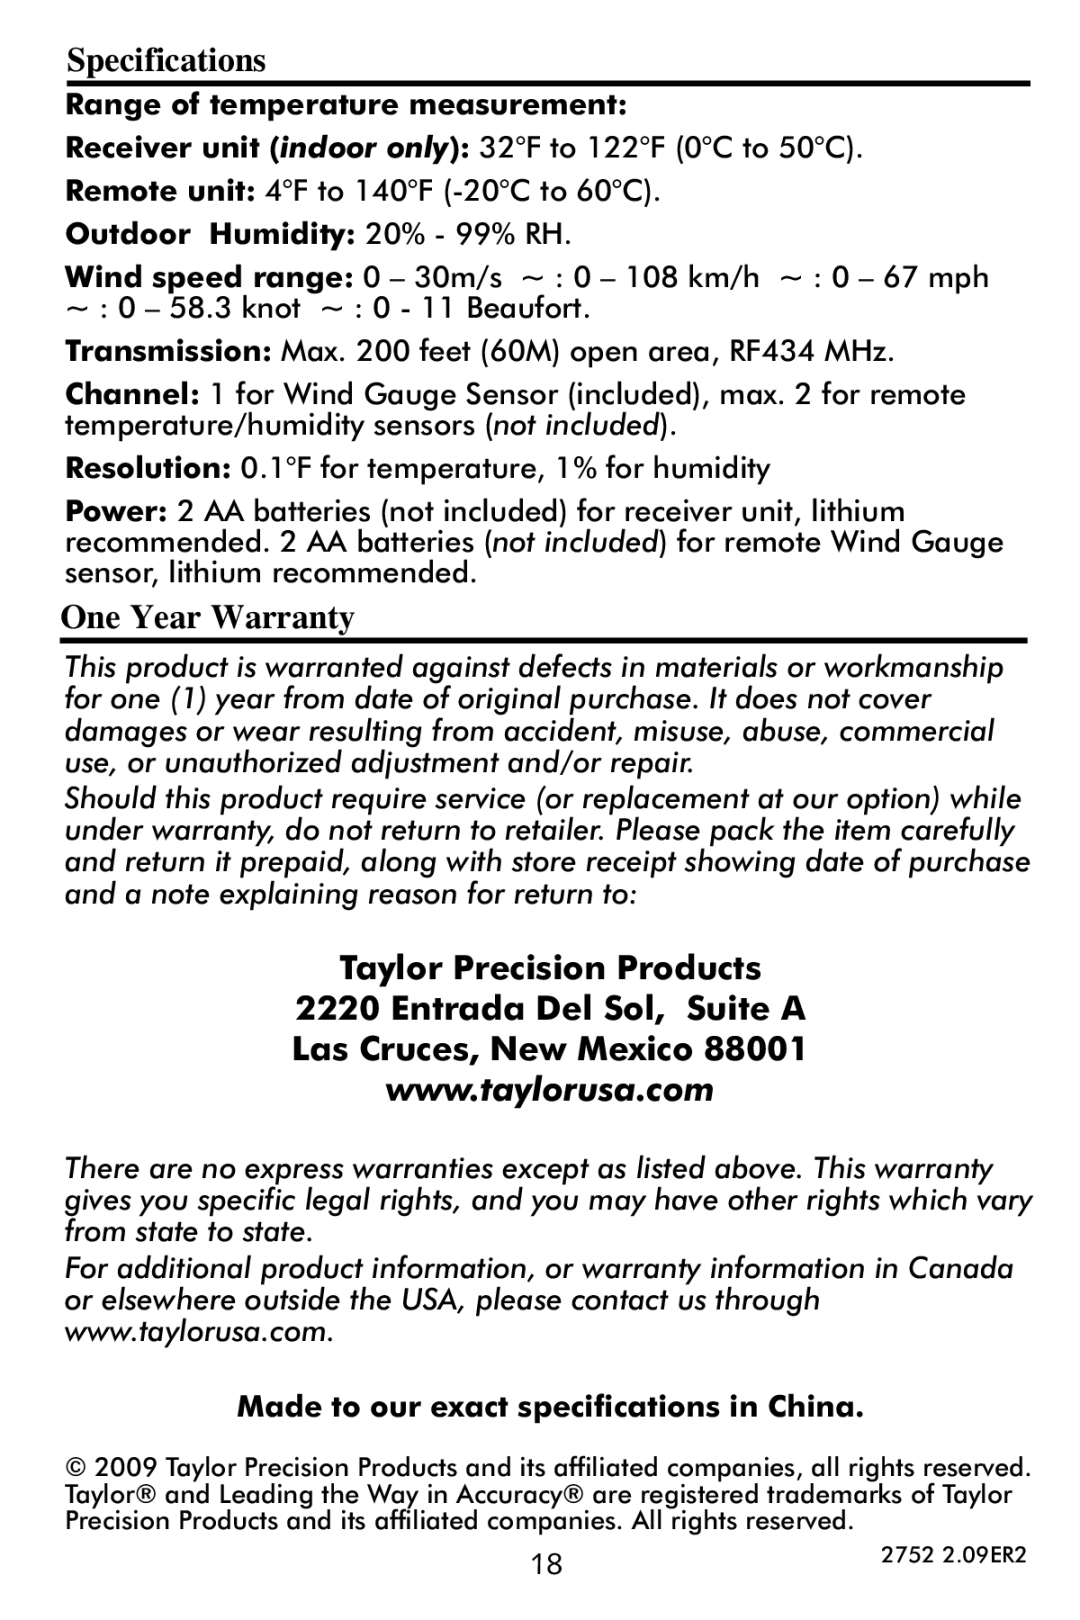 Taylor 2752 Specifications, One Year Warranty, Taylor Precision Products, Entrada Del Sol, Suite A, Las Cruces, New Mexico 